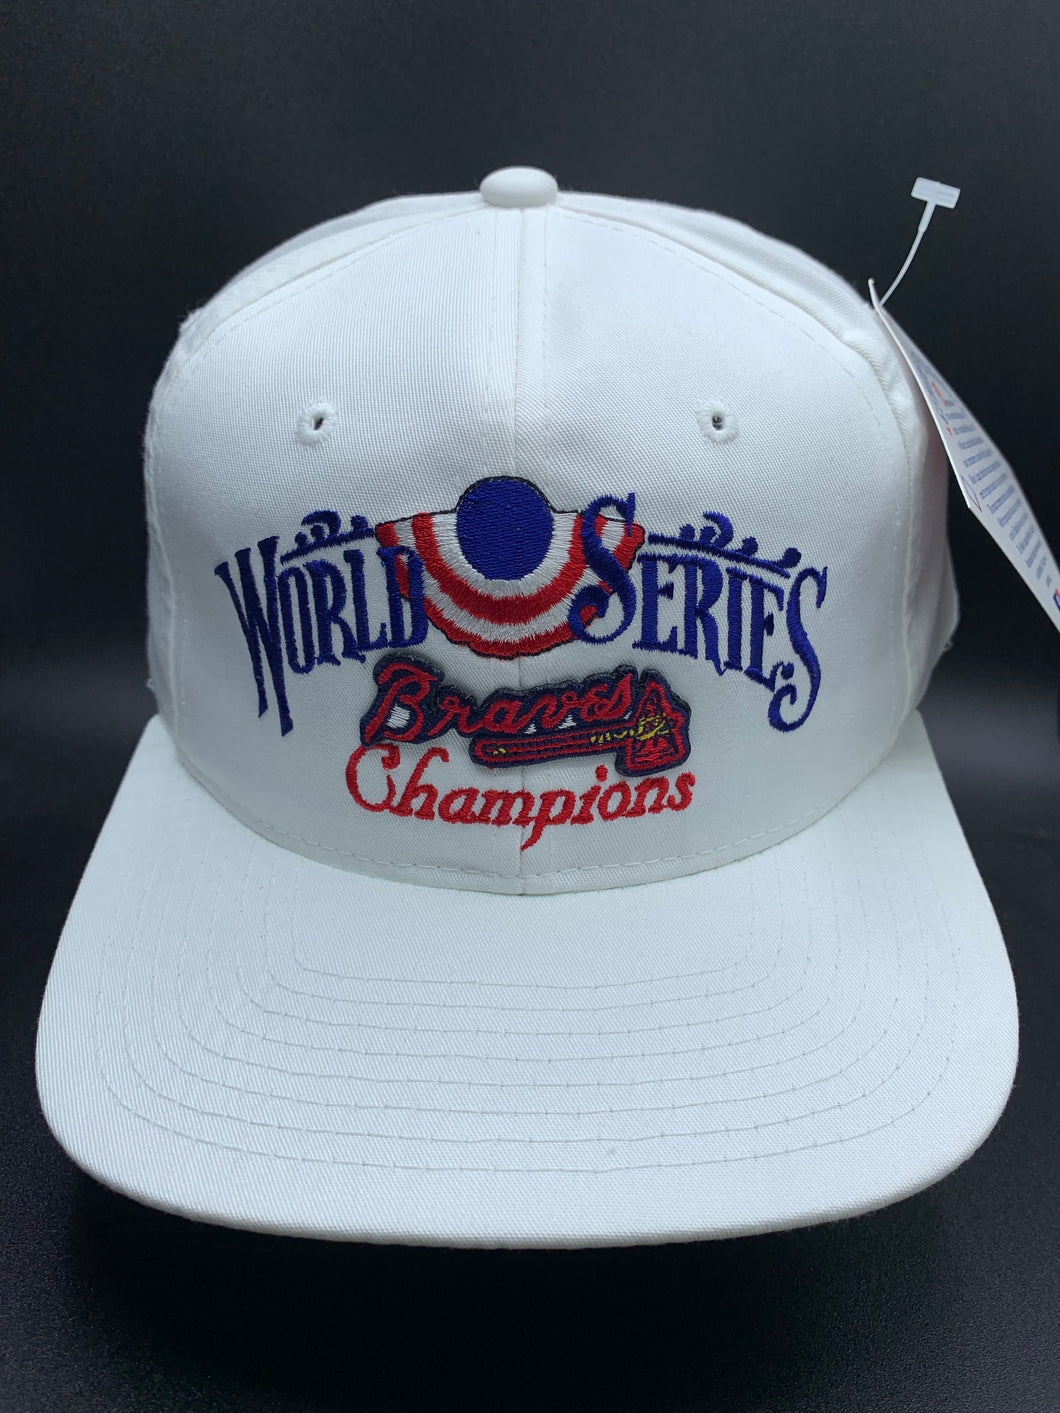 1995 Atlanta Braves World Series Snapback Hat – Alabama VTG